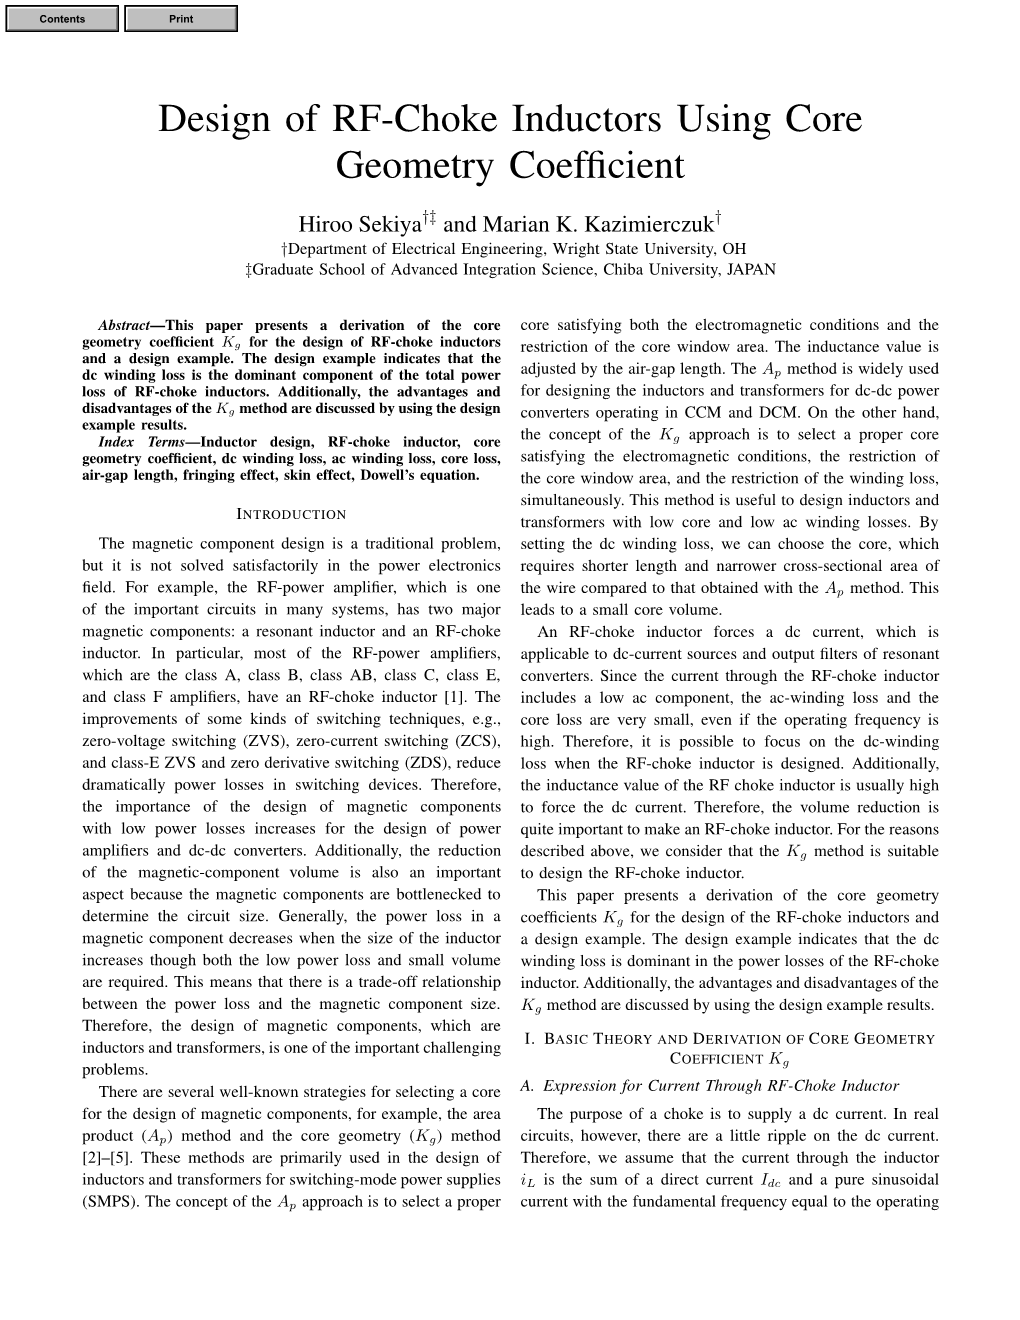 Design of Rf-Choke Inductors Using Core Geometry Coefficient